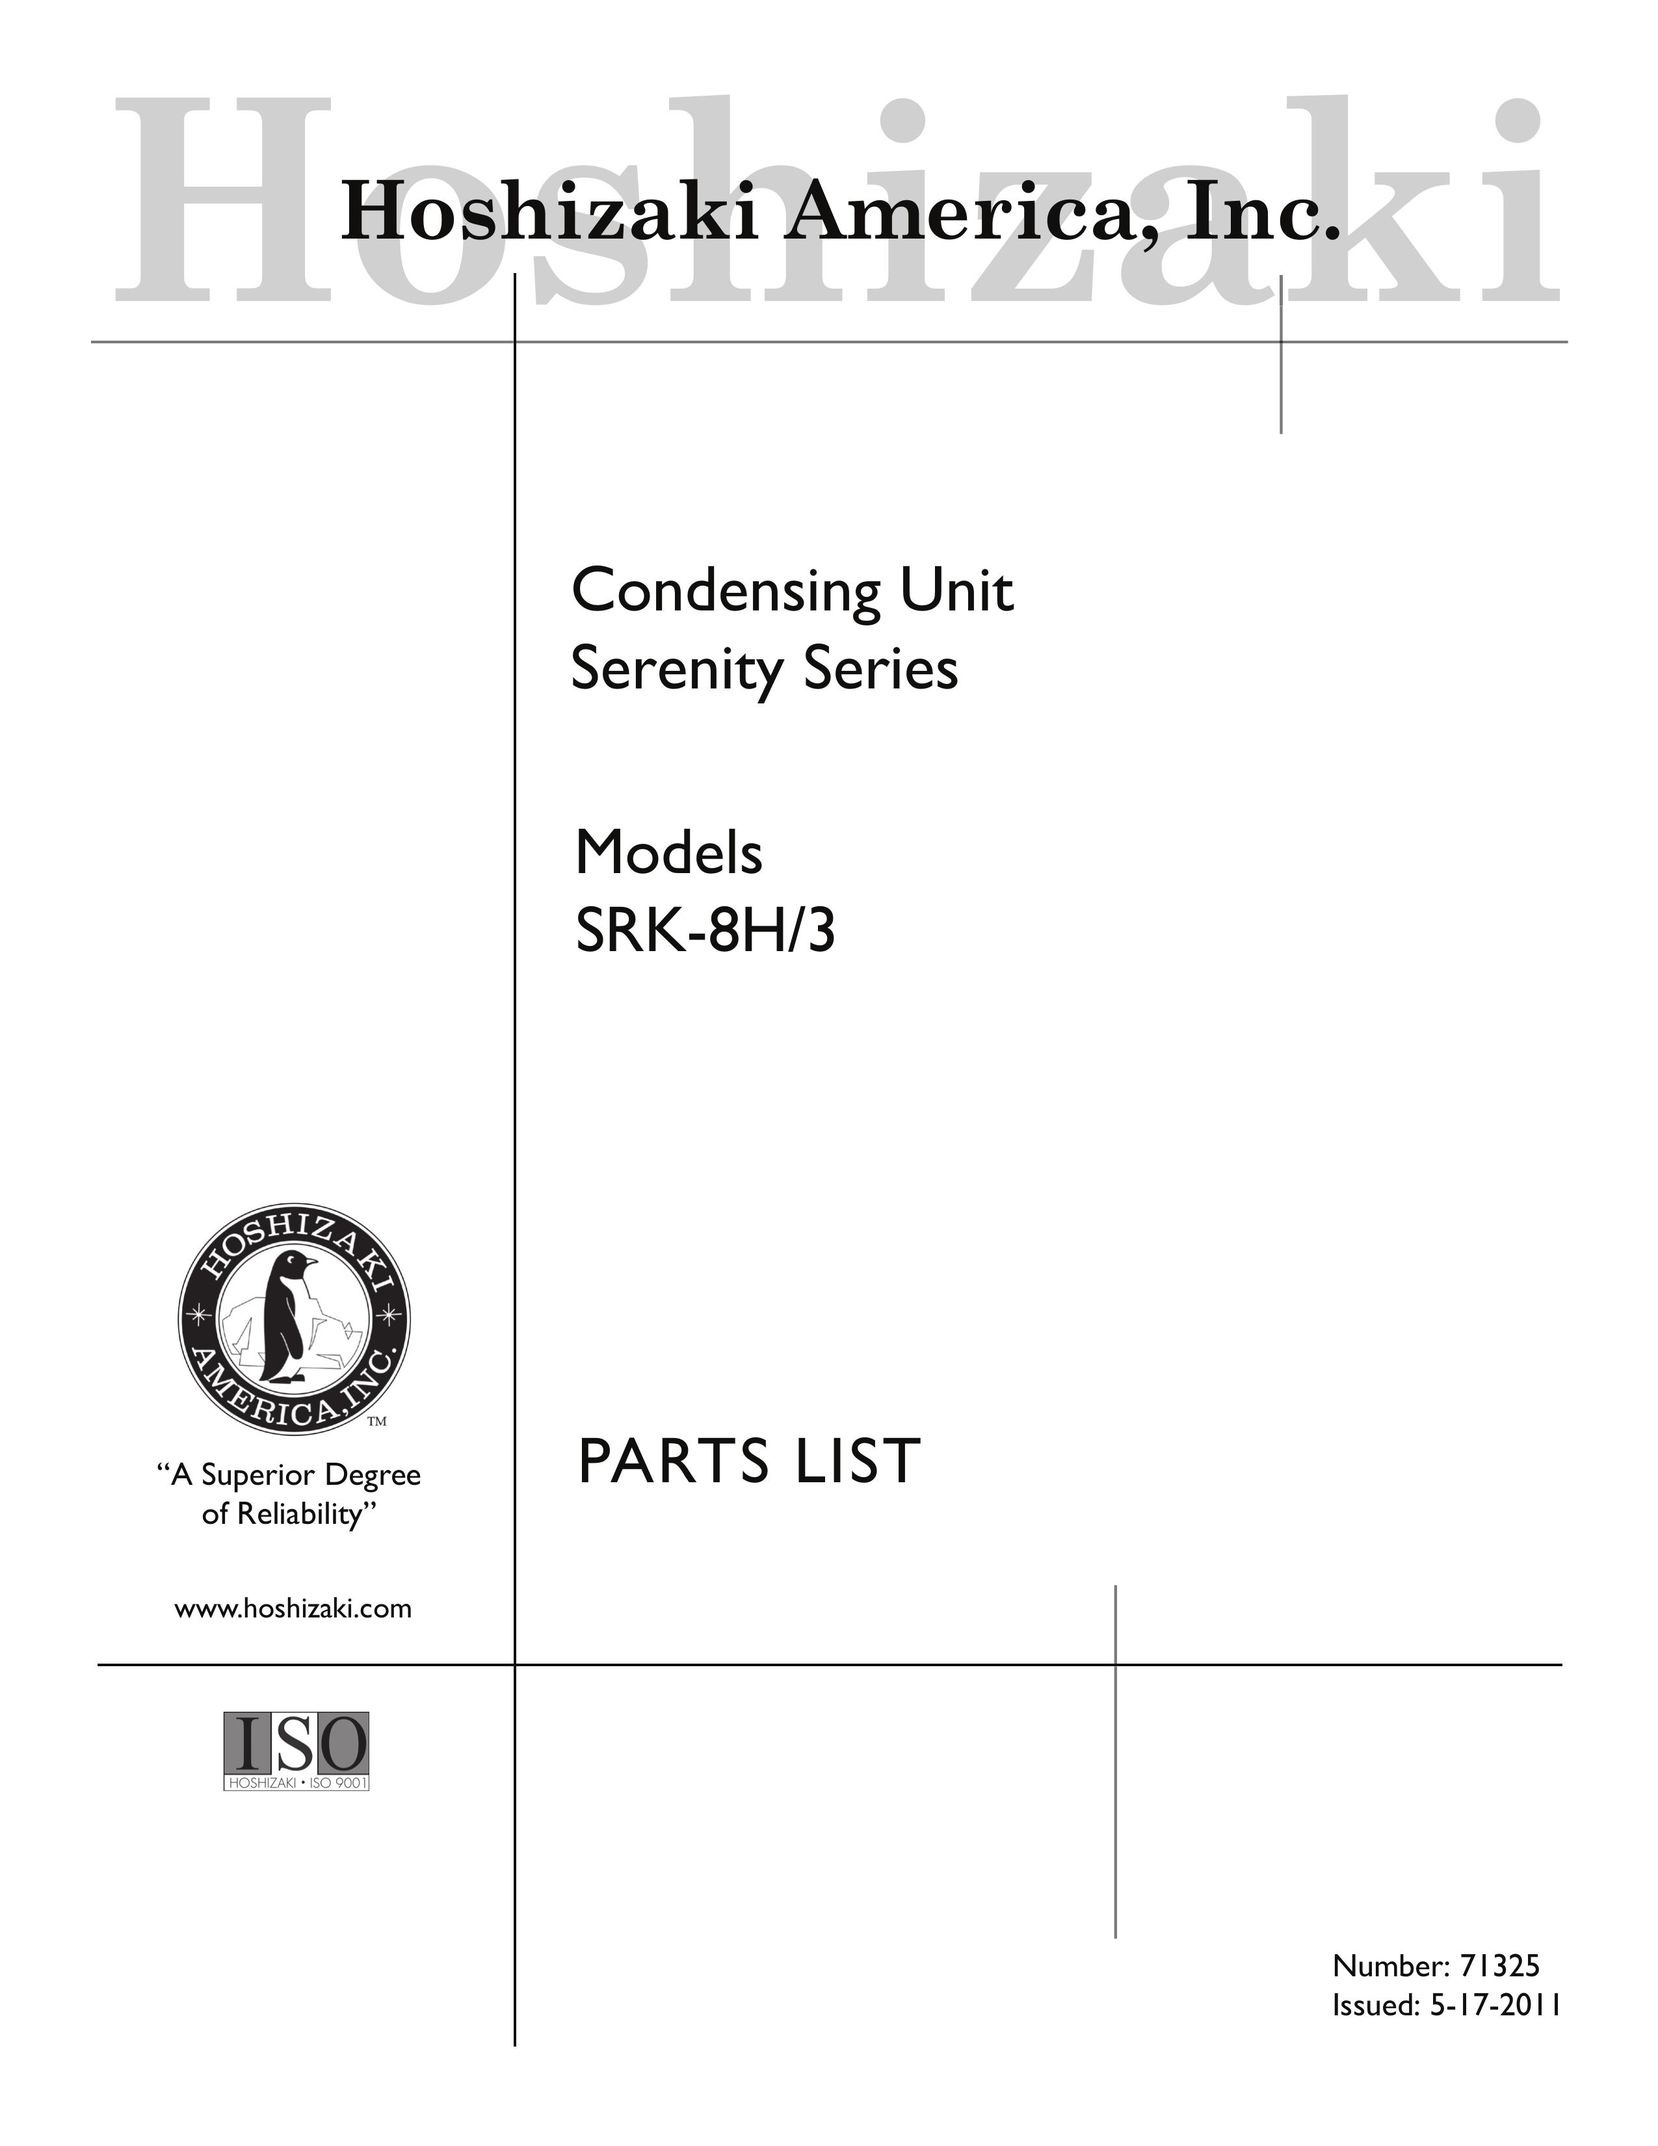 Hoshizaki SRK-8H/3 Air Conditioner User Manual